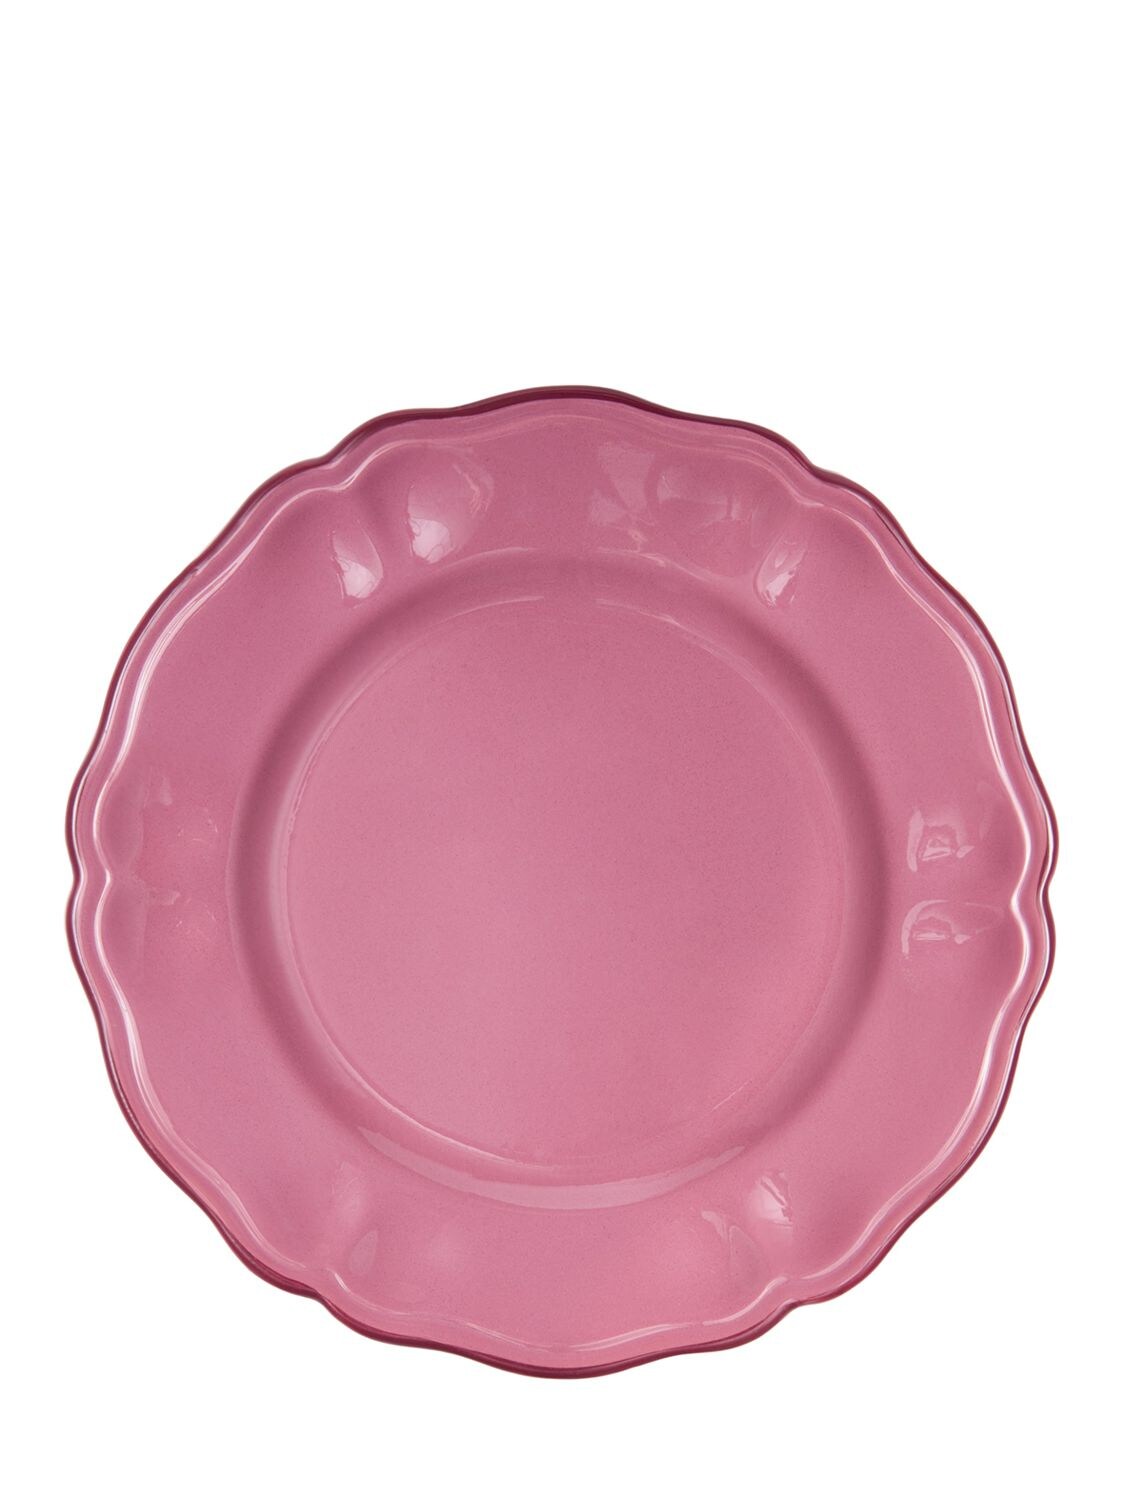 Cabana Iris Dinner Plate In Pink